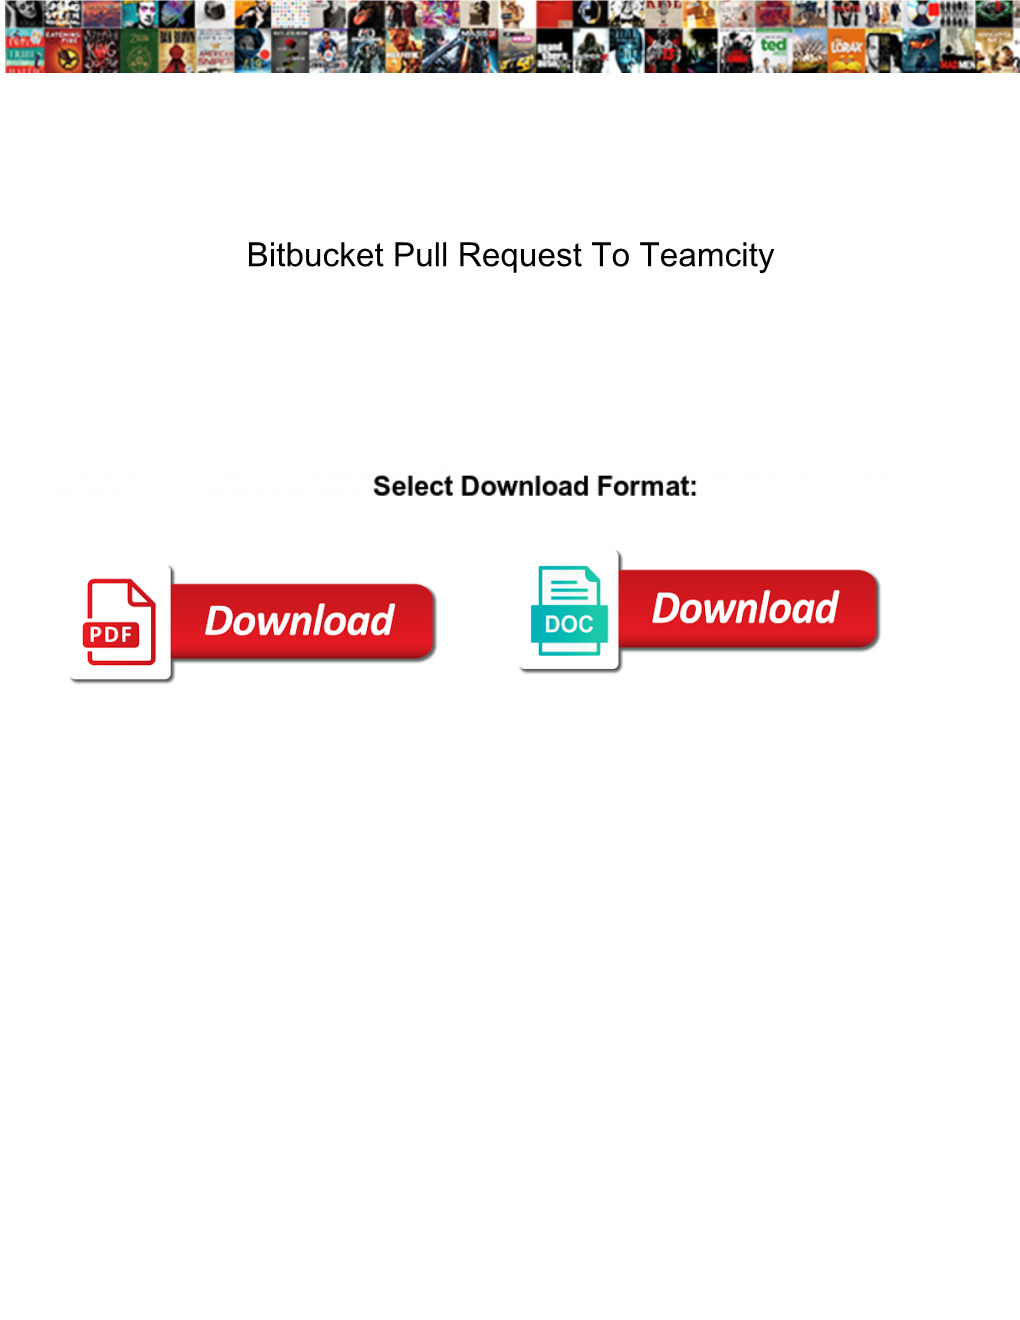 Bitbucket Pull Request to Teamcity